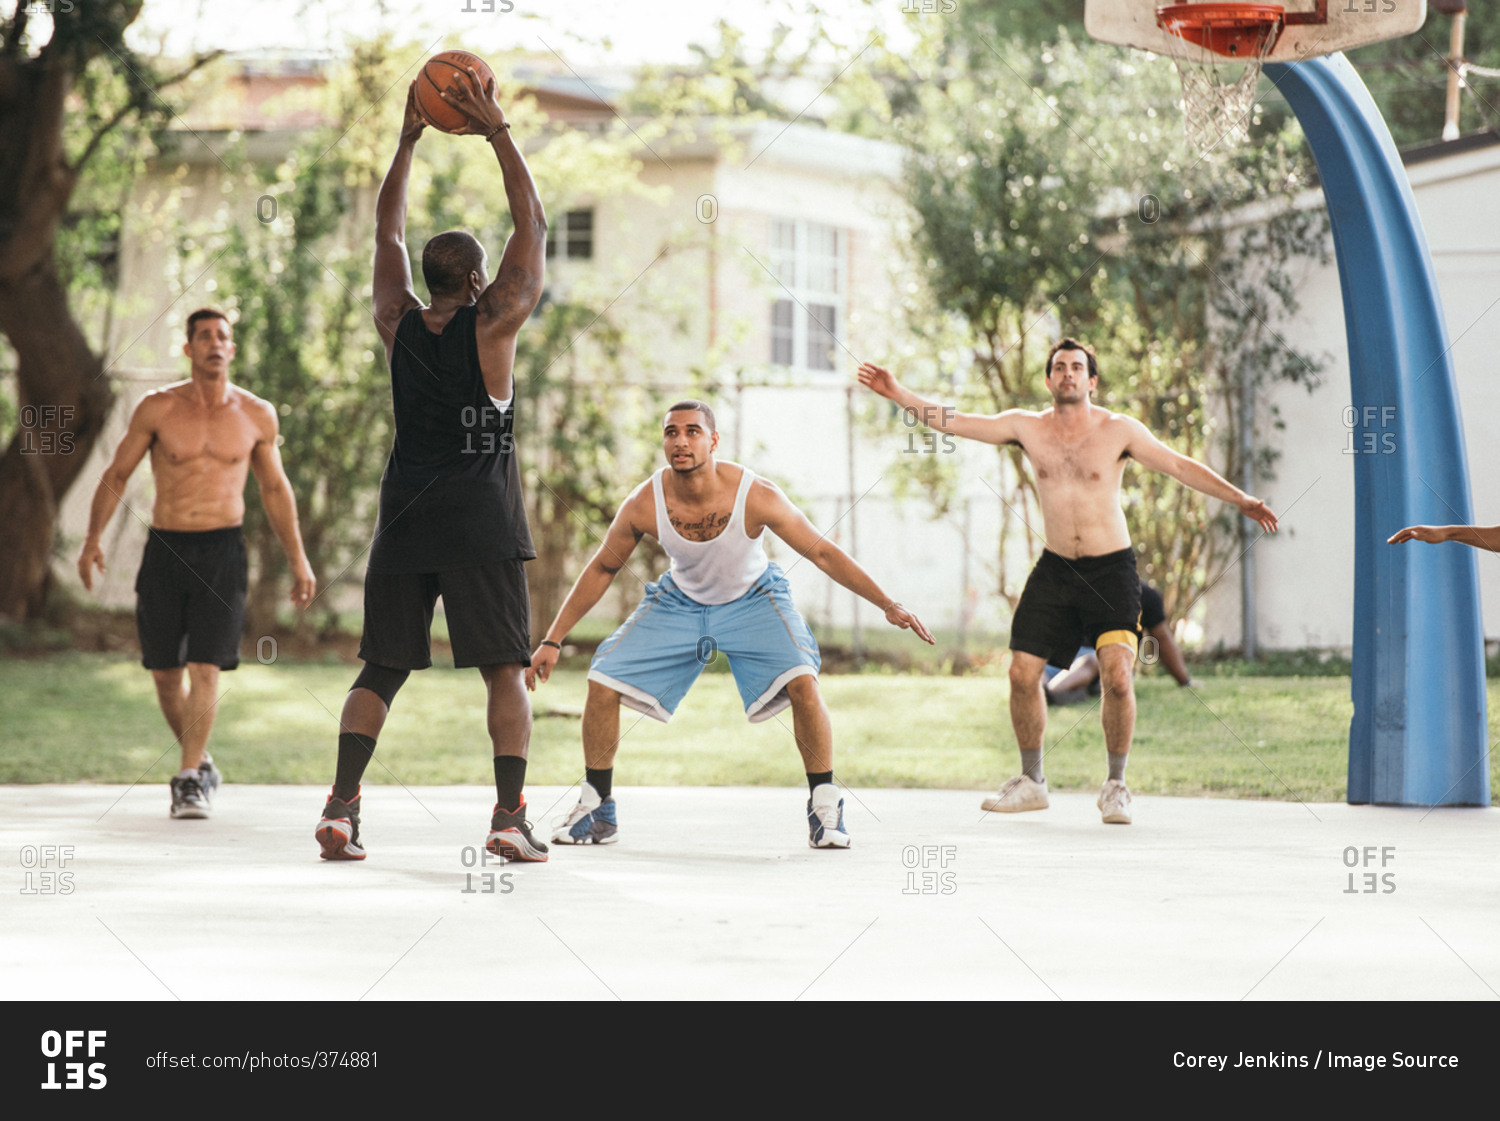 Men on basketball court playing basketball, defending hoop